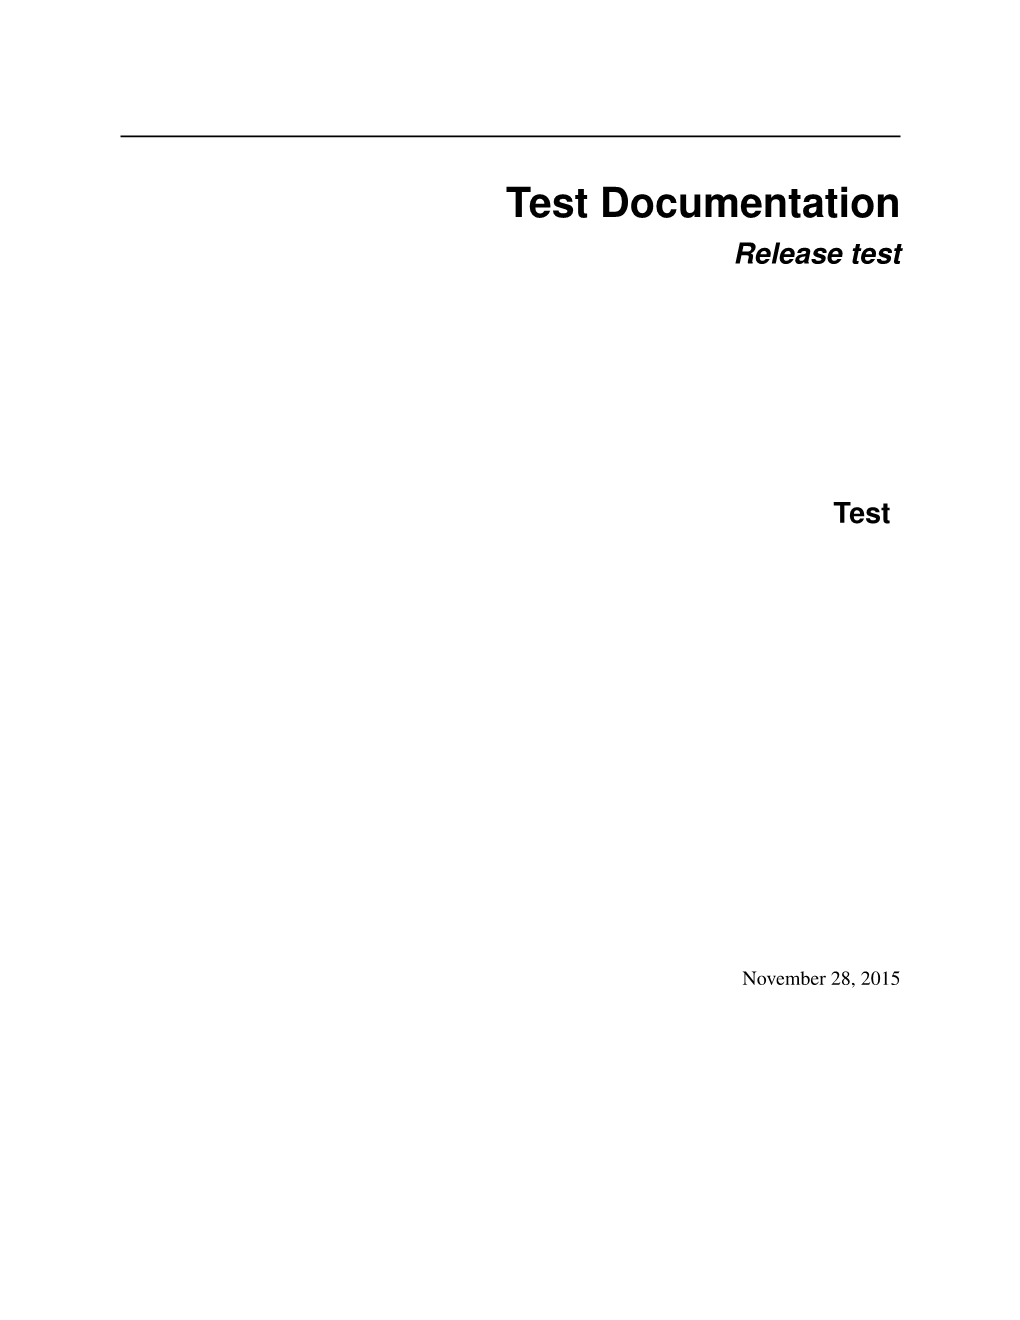 Test Documentation Release Test